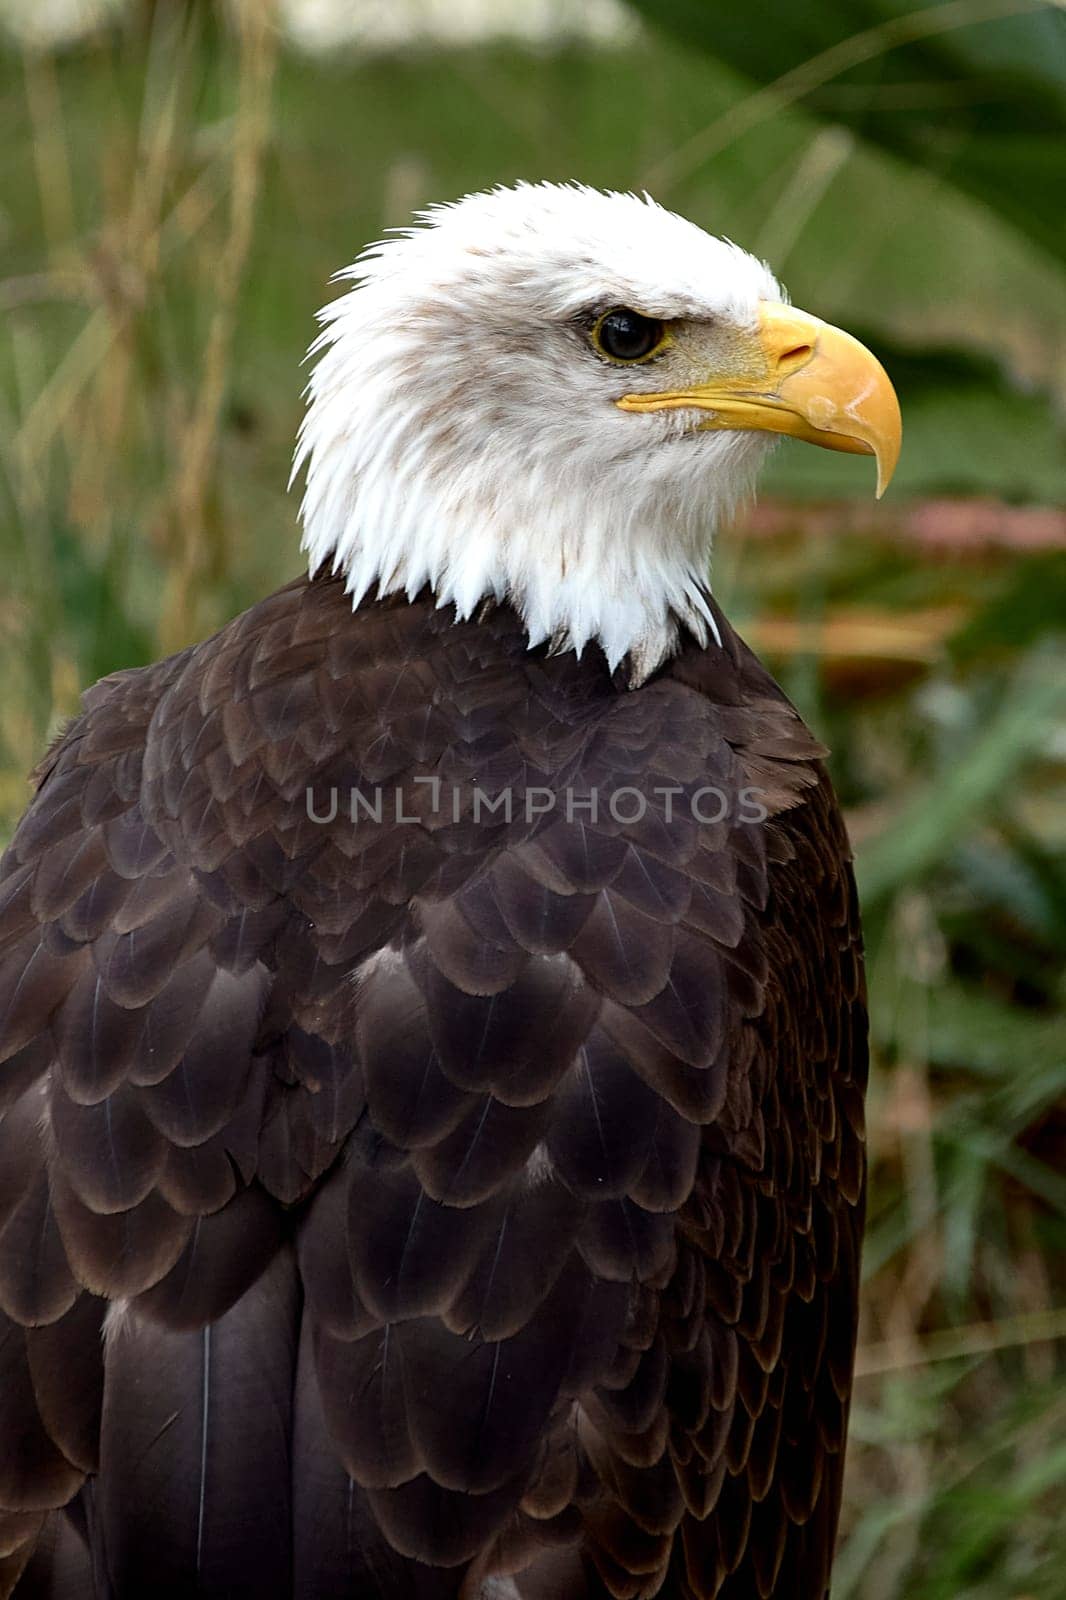 A bald eagle perched on a ring. Haliaeetus leucocephalus.Background blurred, texture, rear view, profile, eye, beak